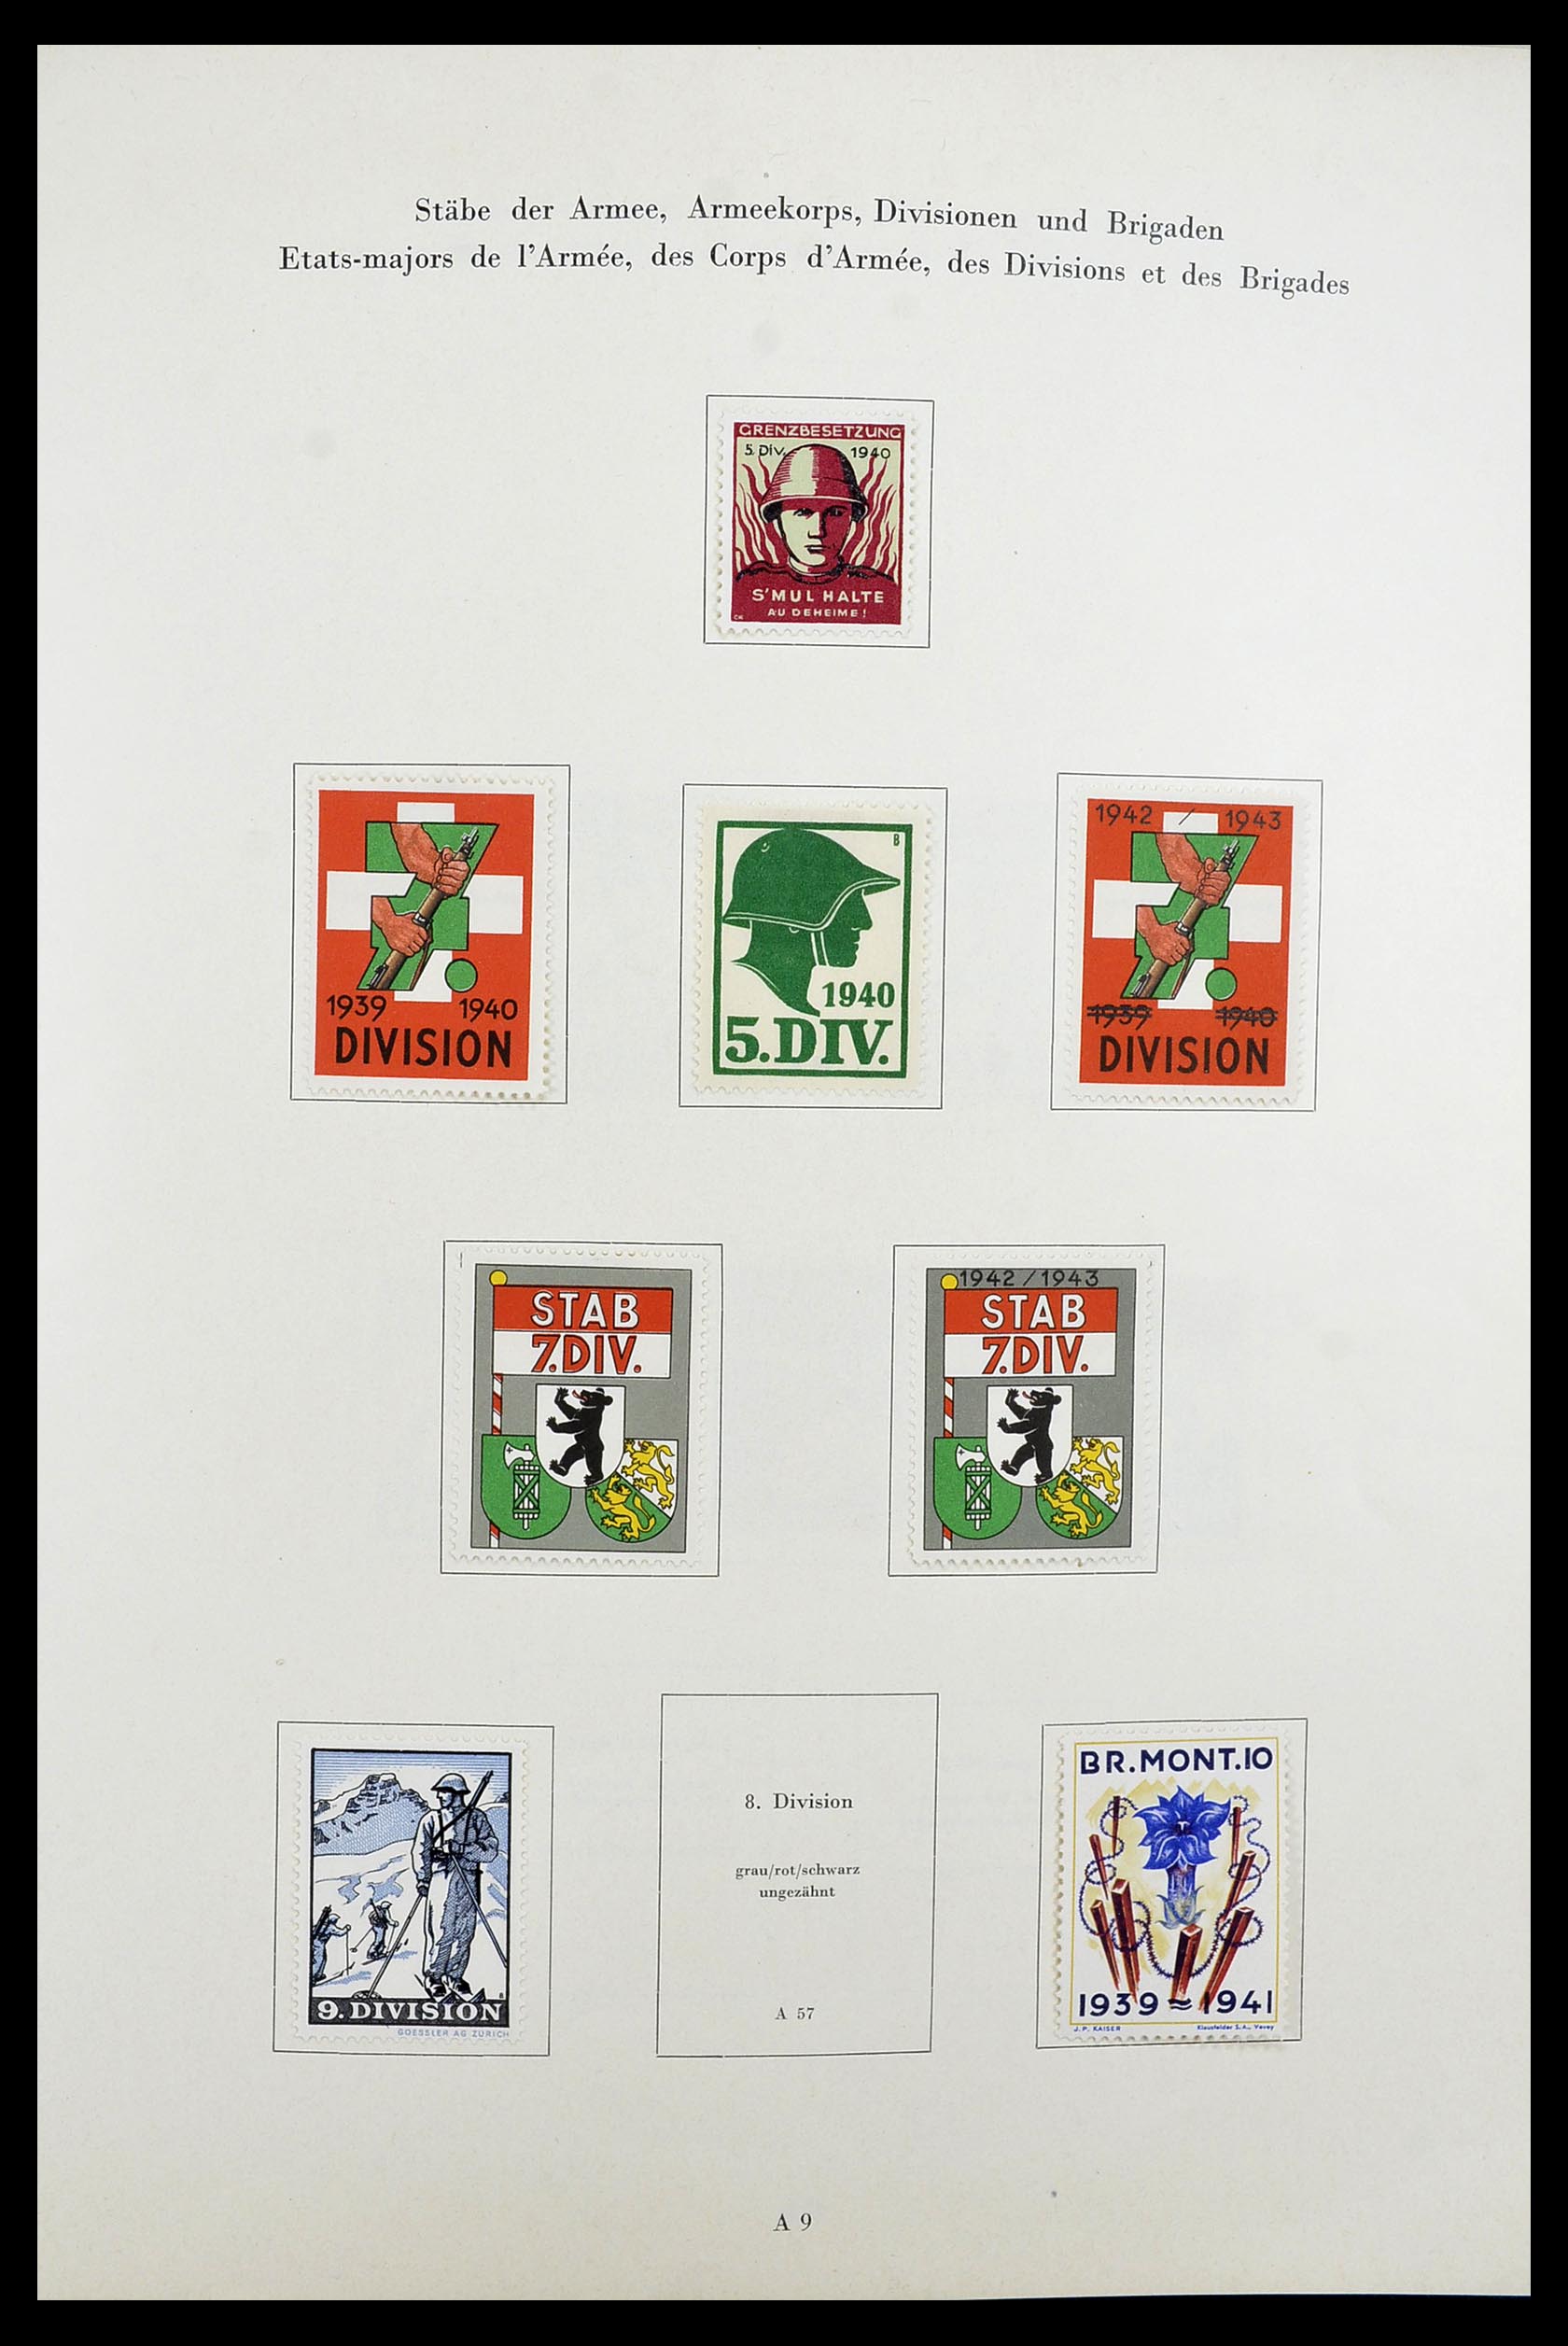 34234 010 - Stamp collection 34234 Switzerland soldier stamps 1939-1945.